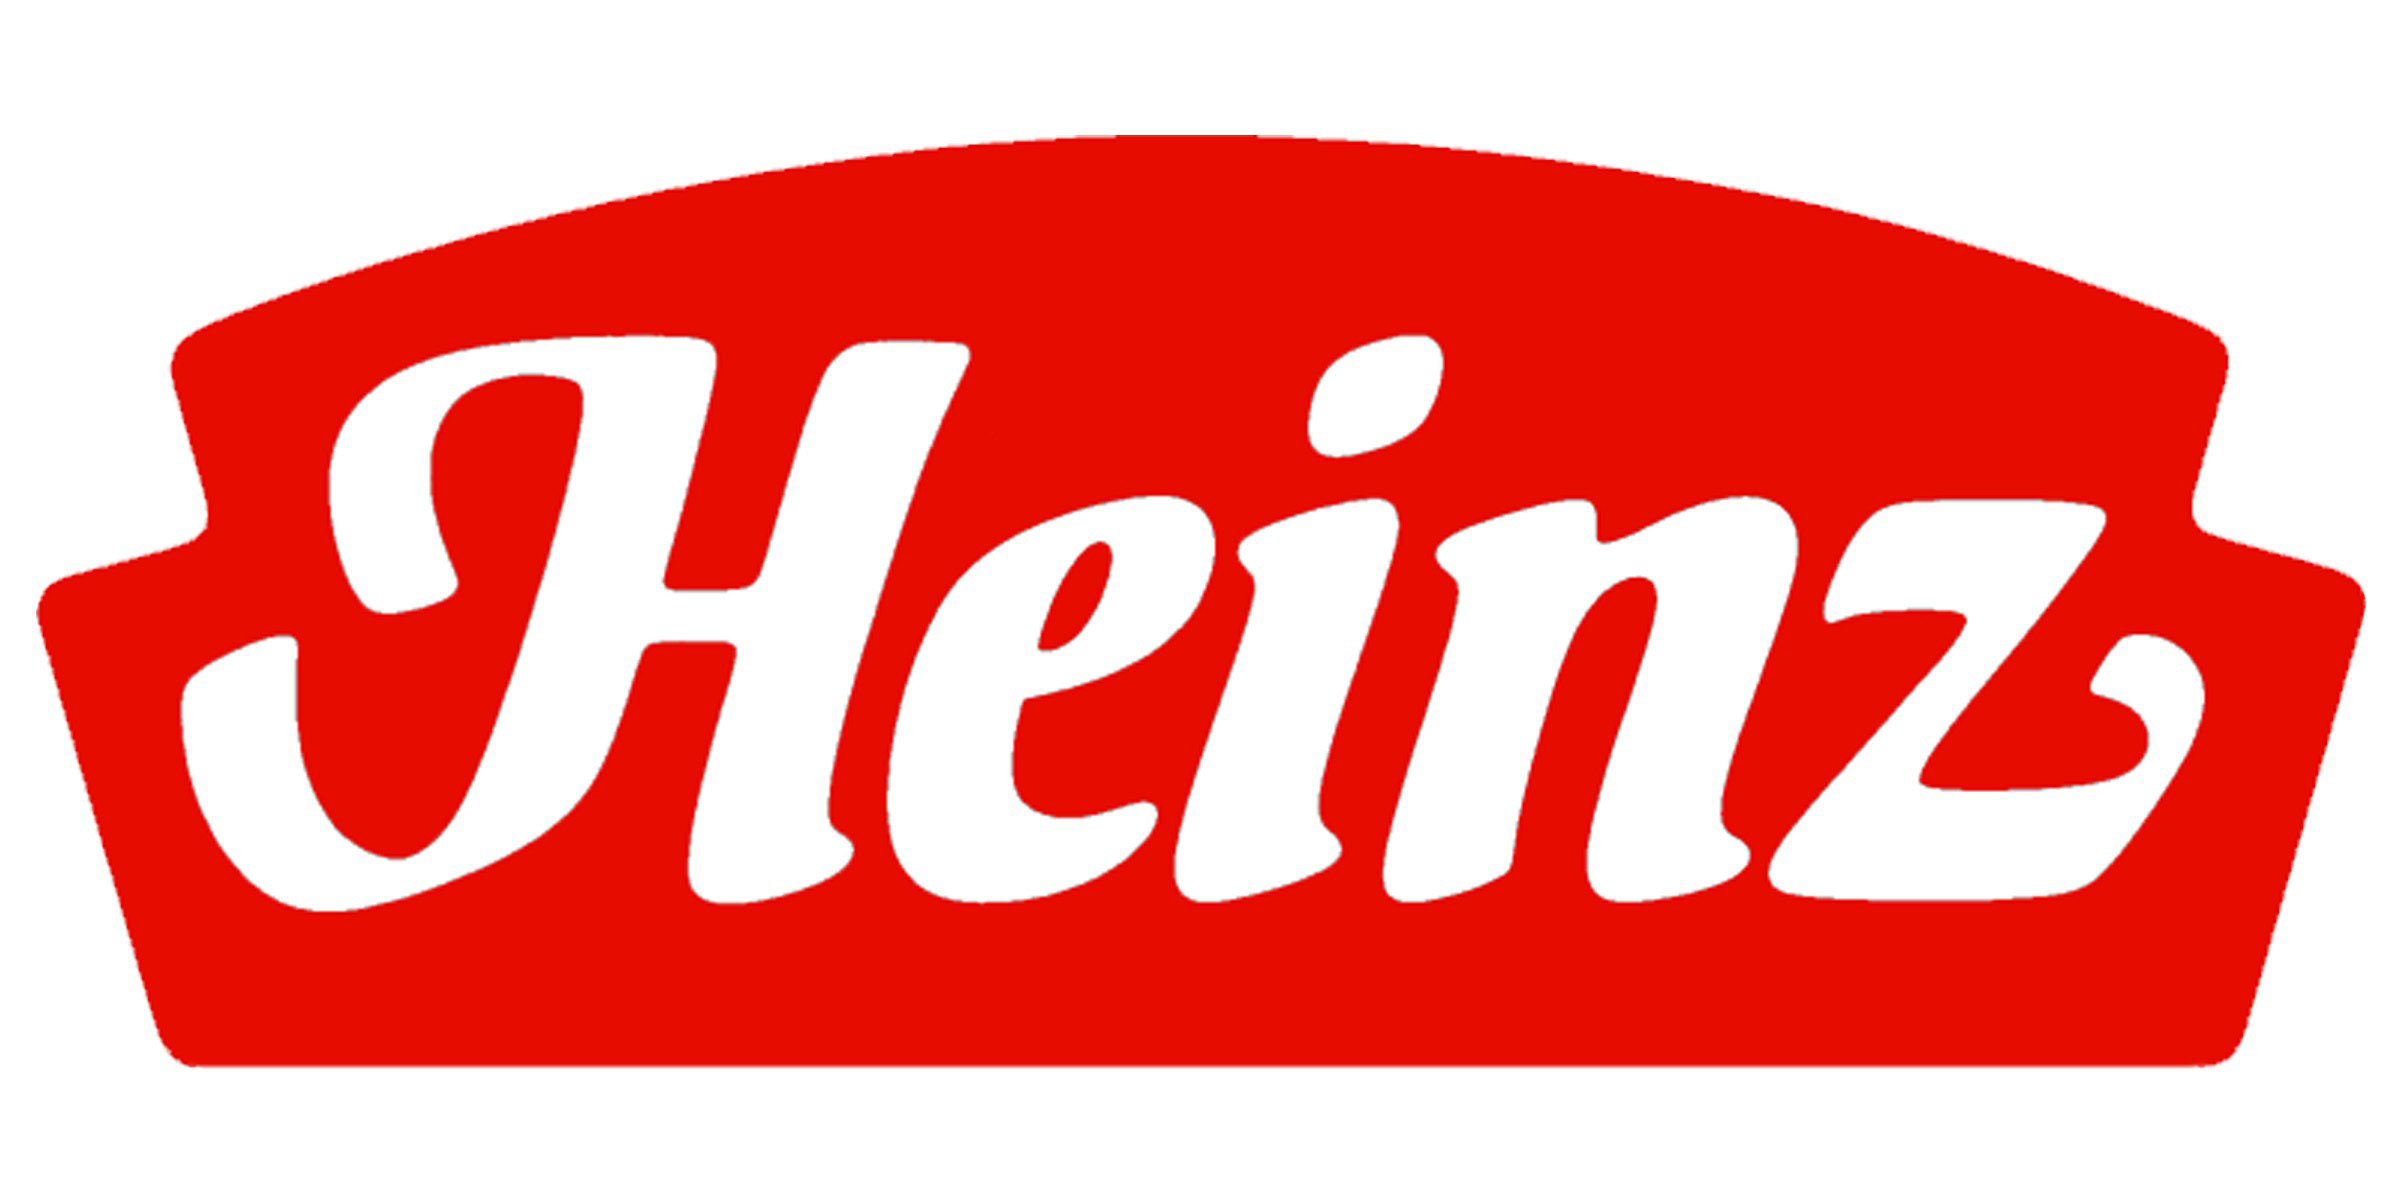 Heinz History Center Logo photo - 1